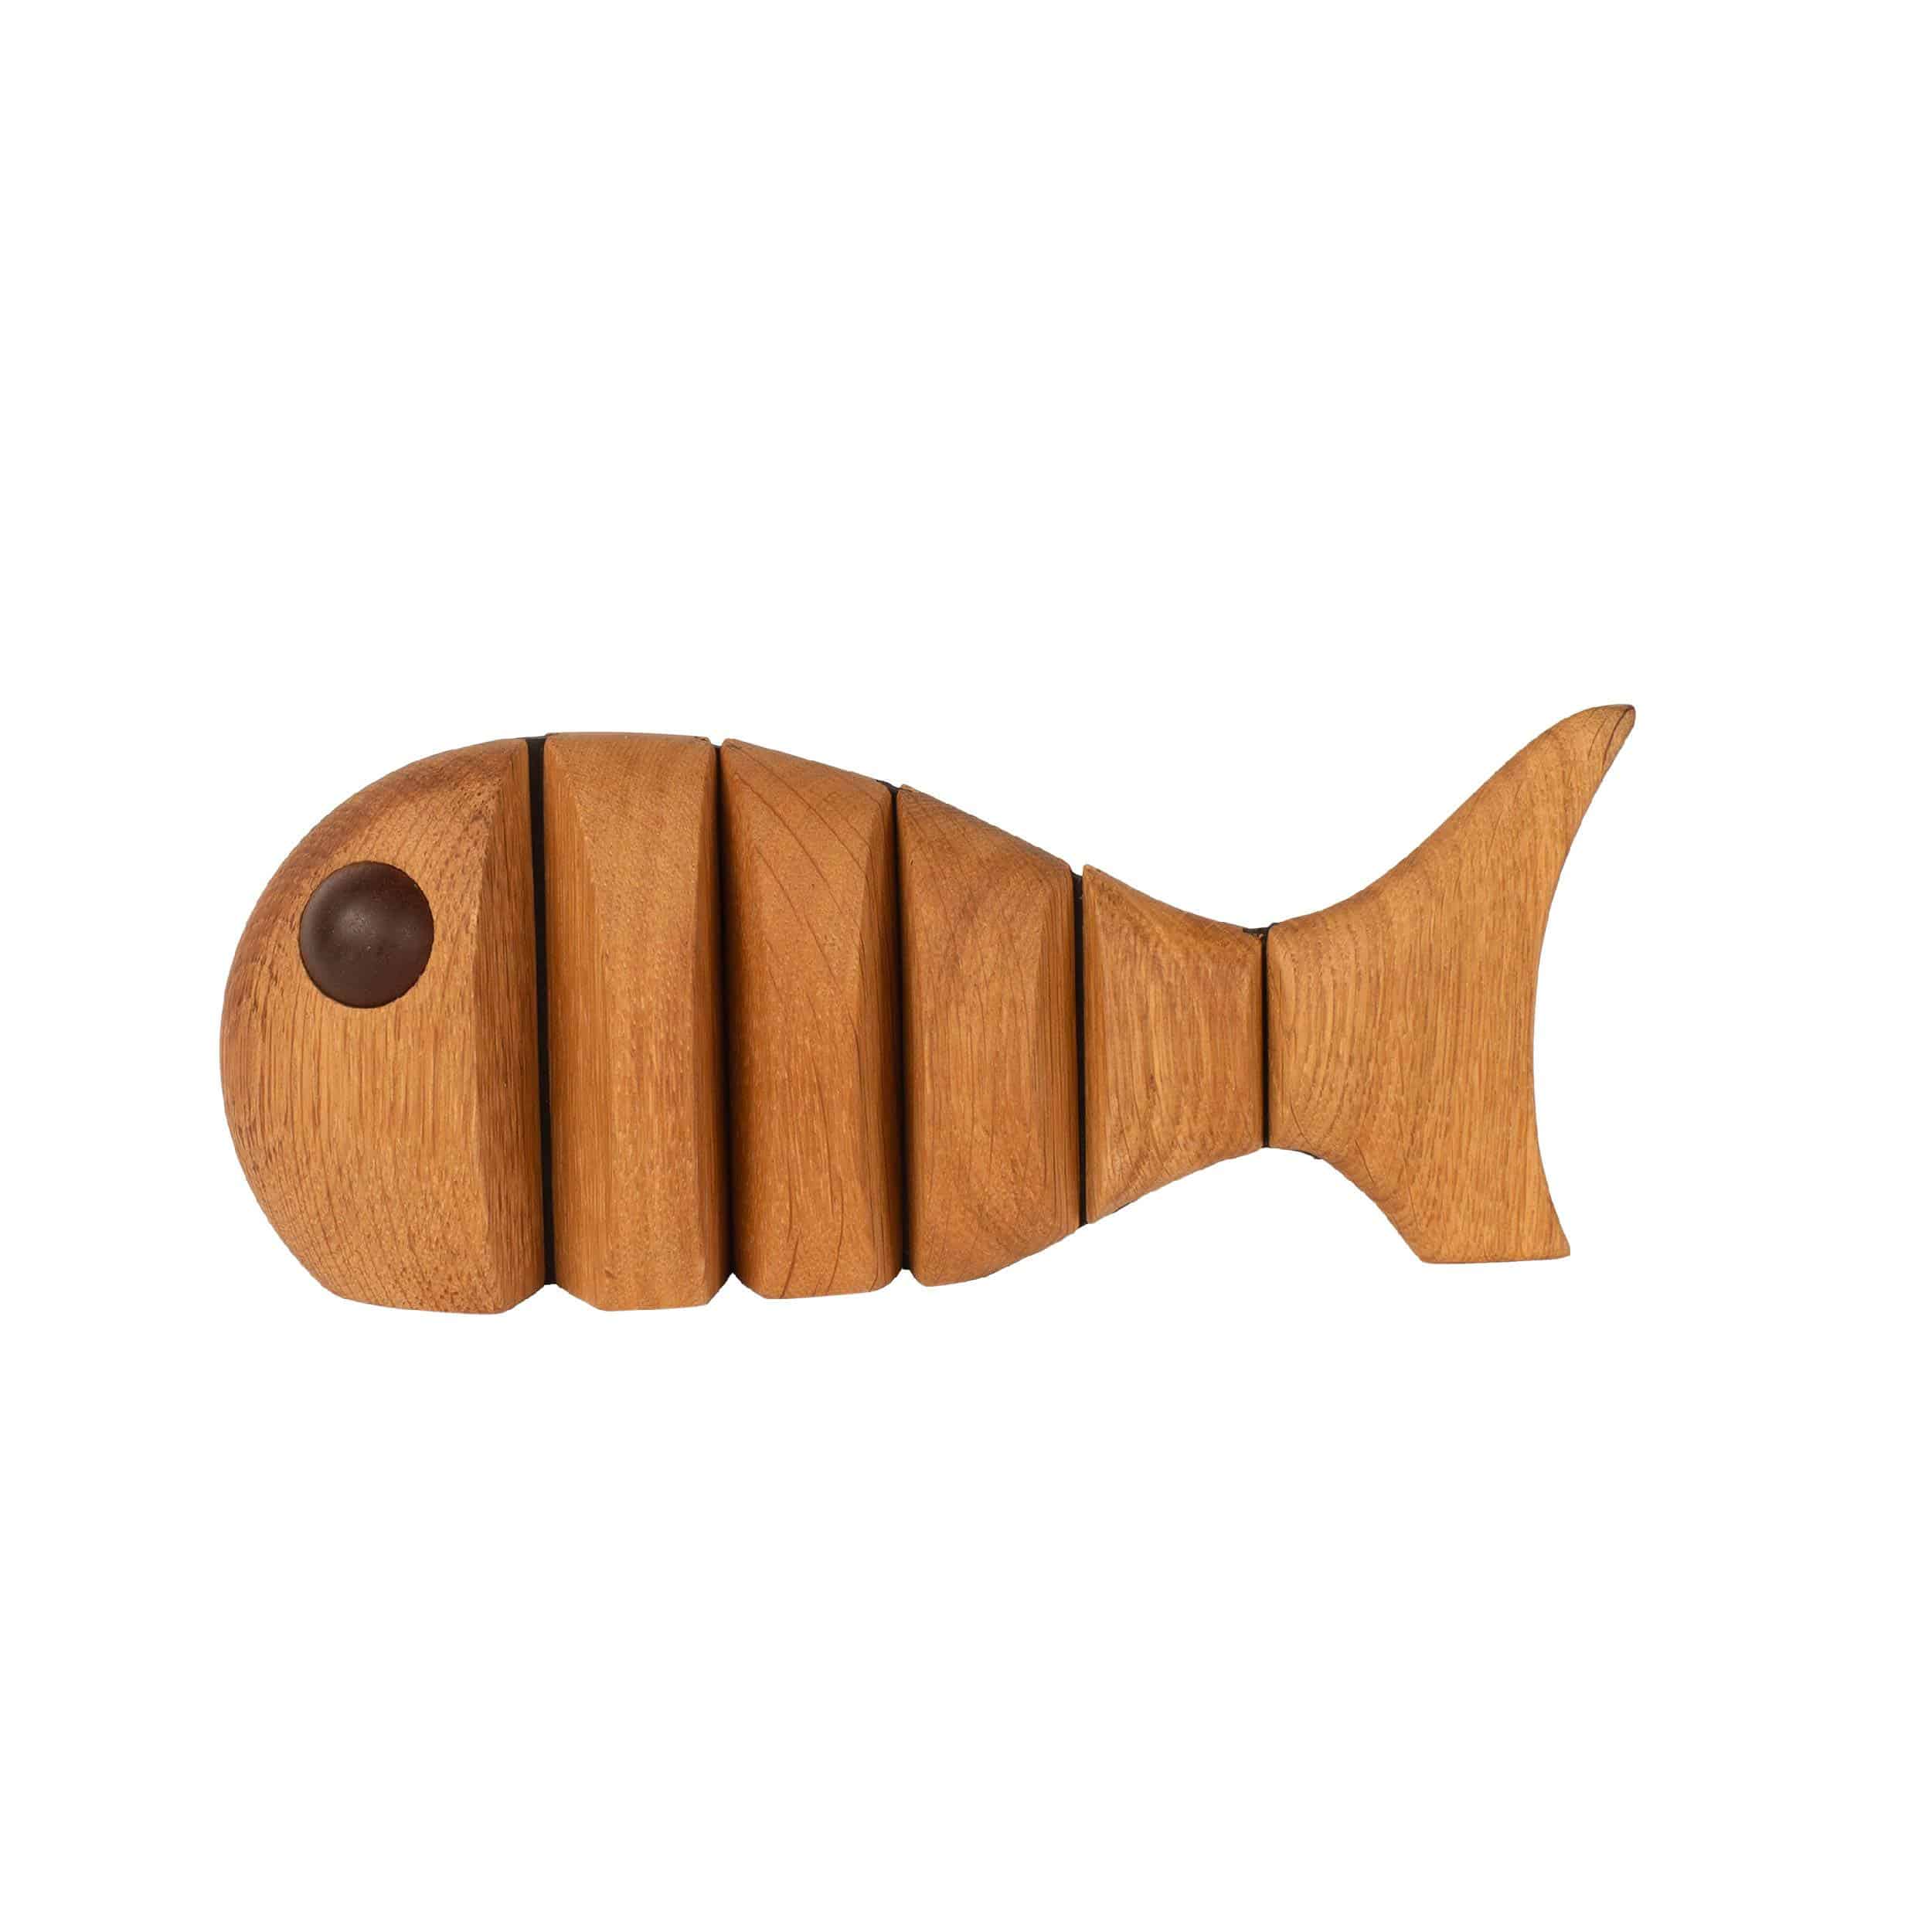 The Wood Fish Figur